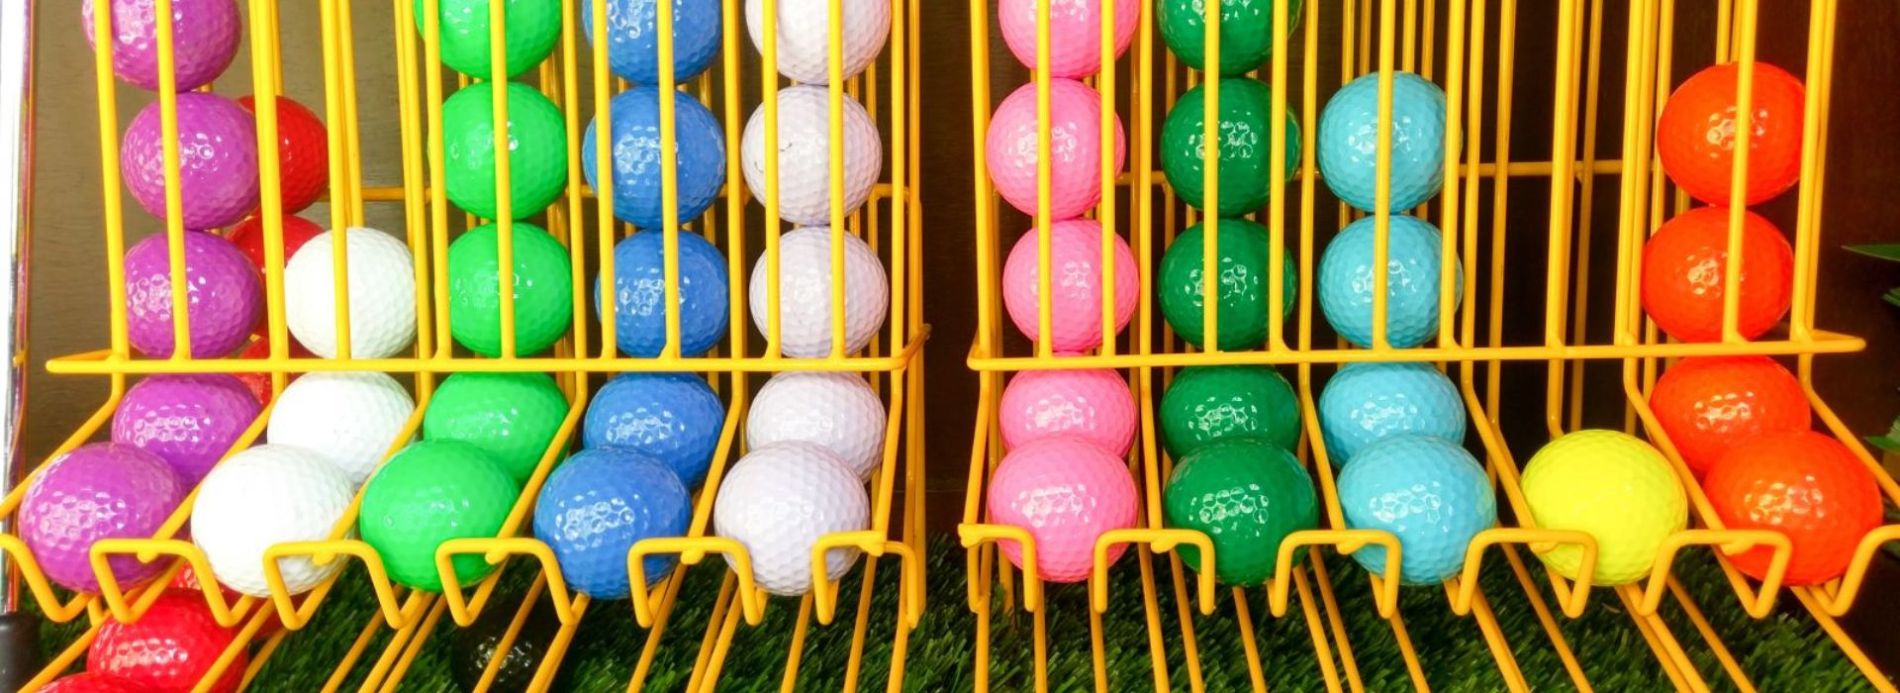 rainbow golf balls header